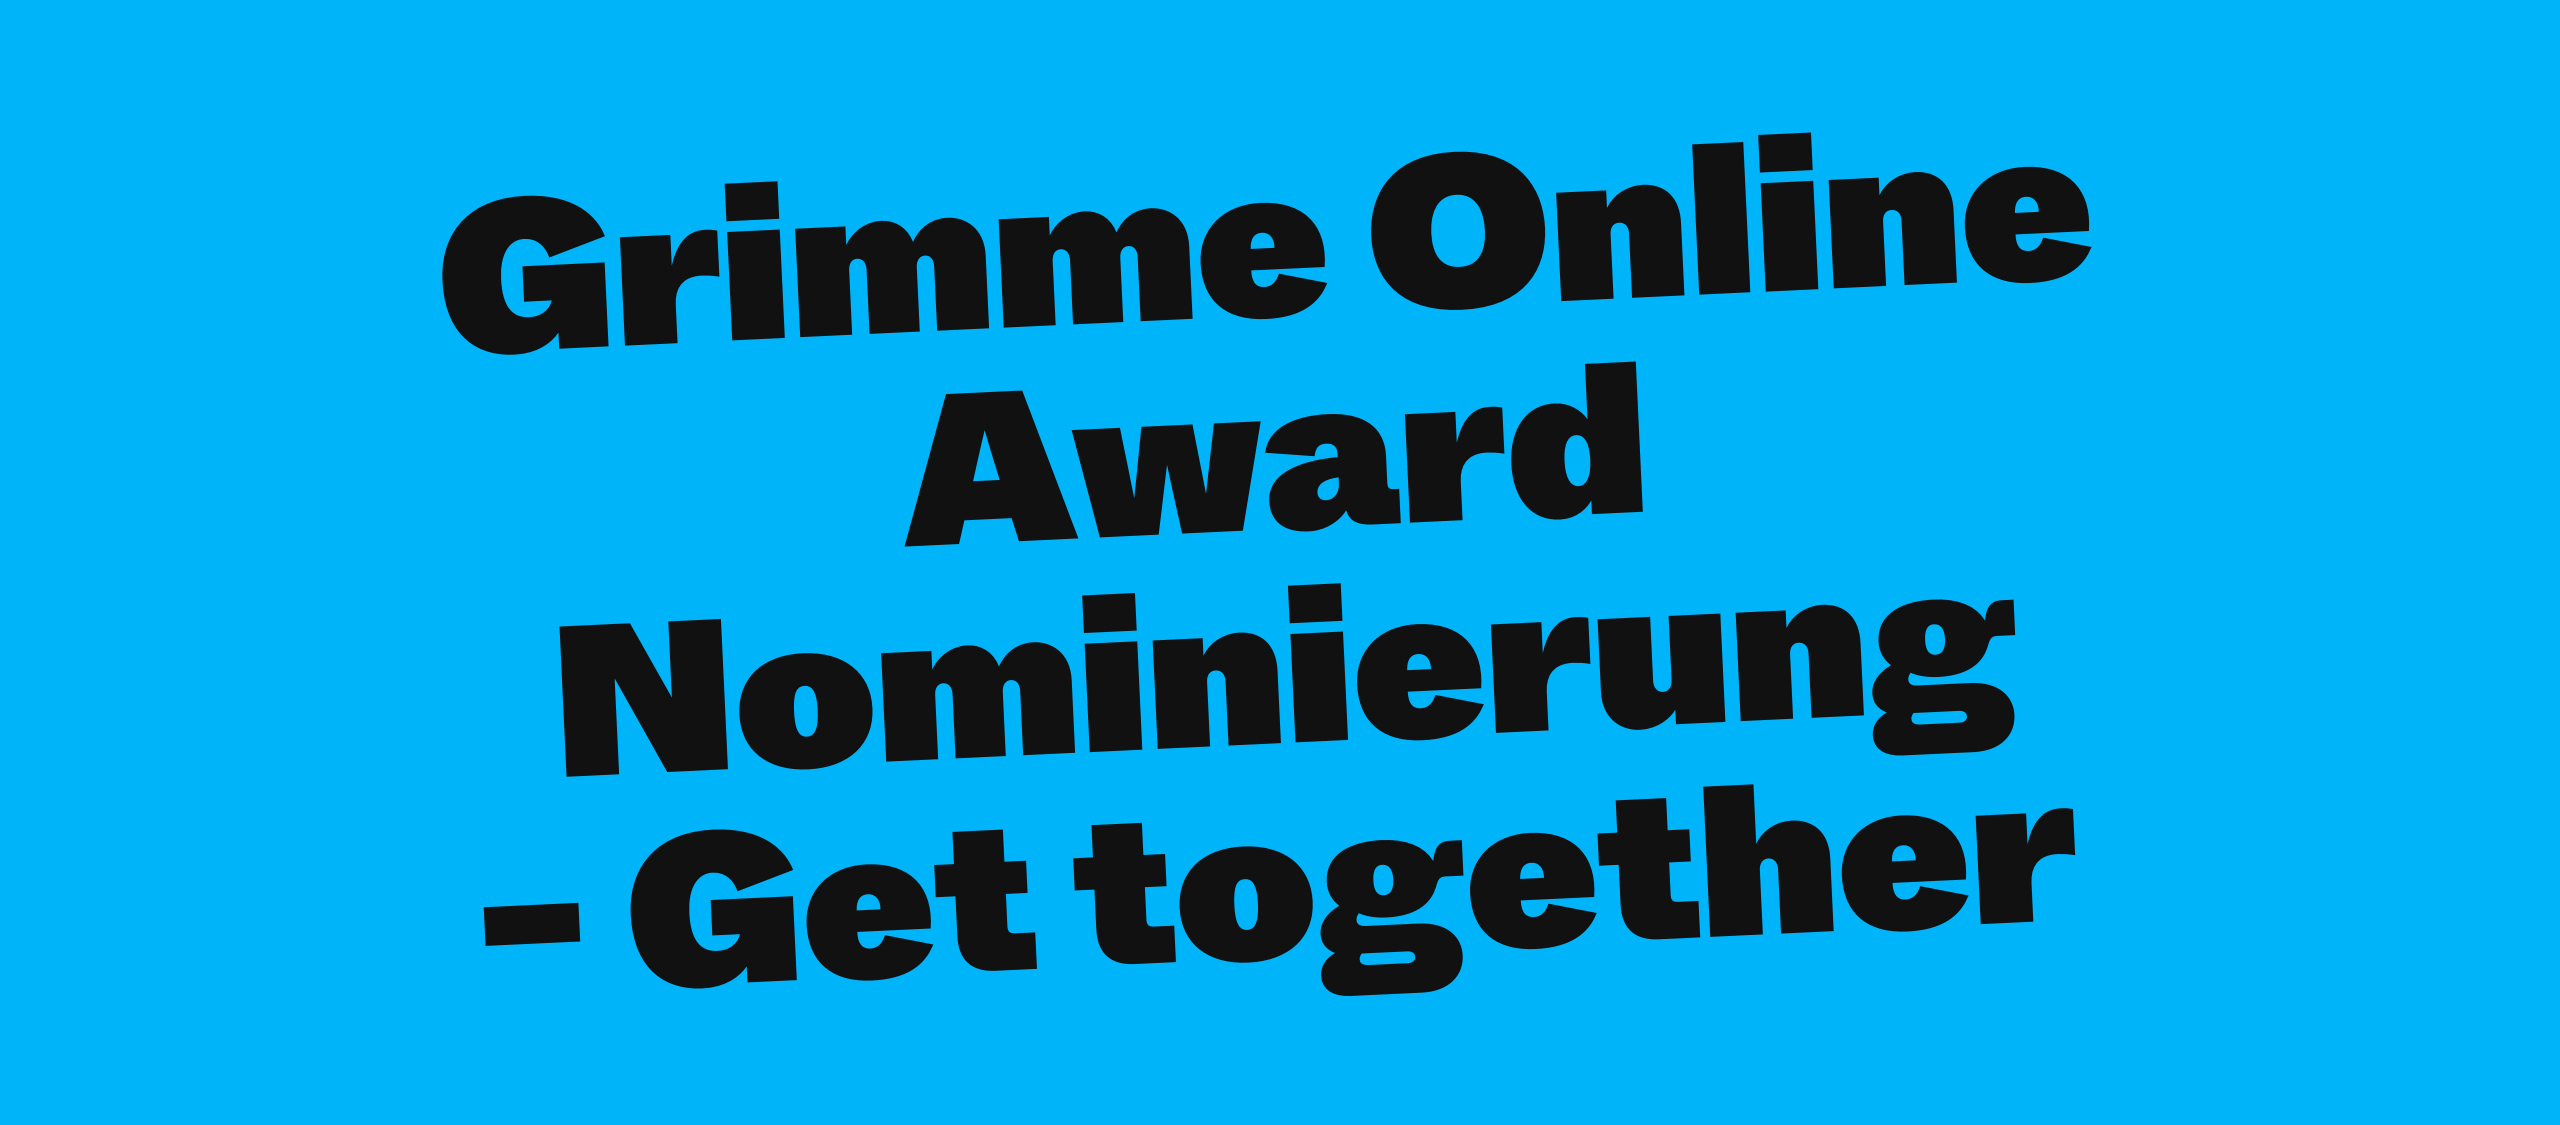 Grimme Online Award Nominierung - Get together